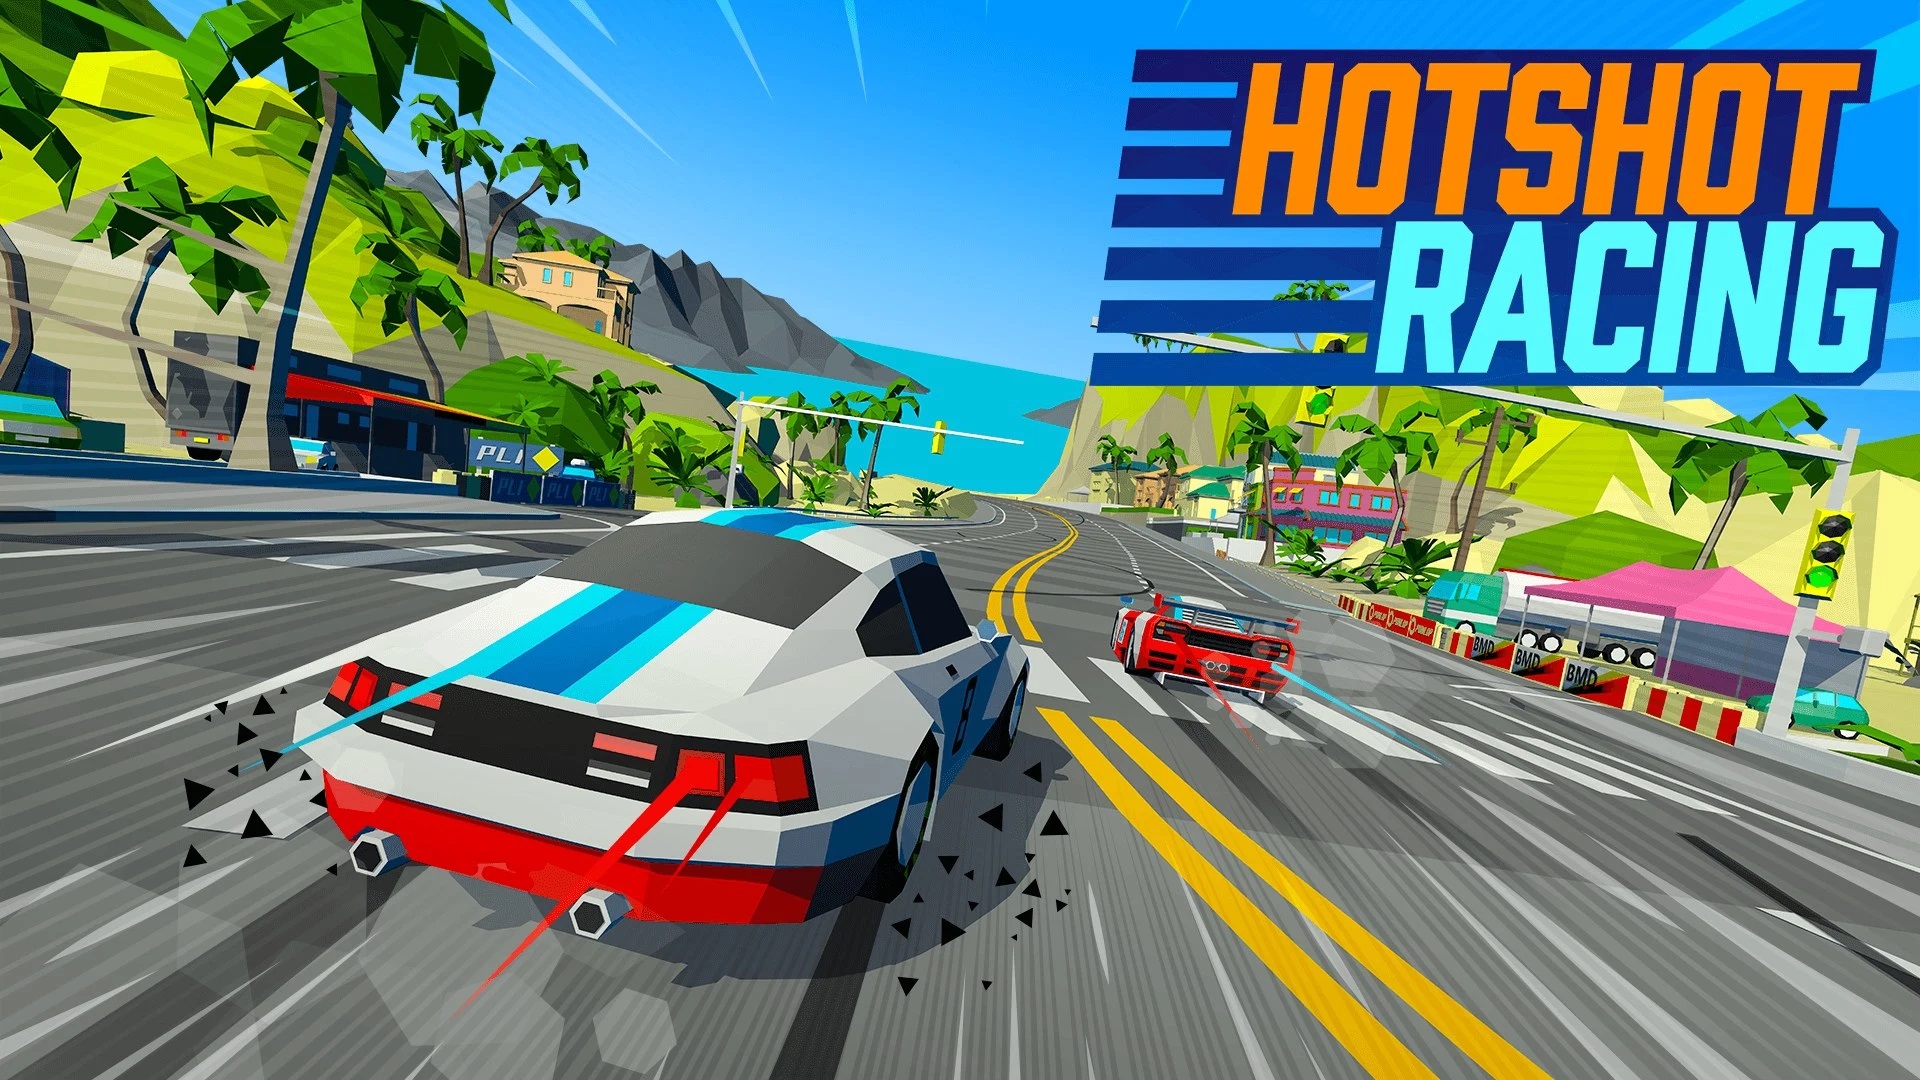 download steam hotshot racing for free